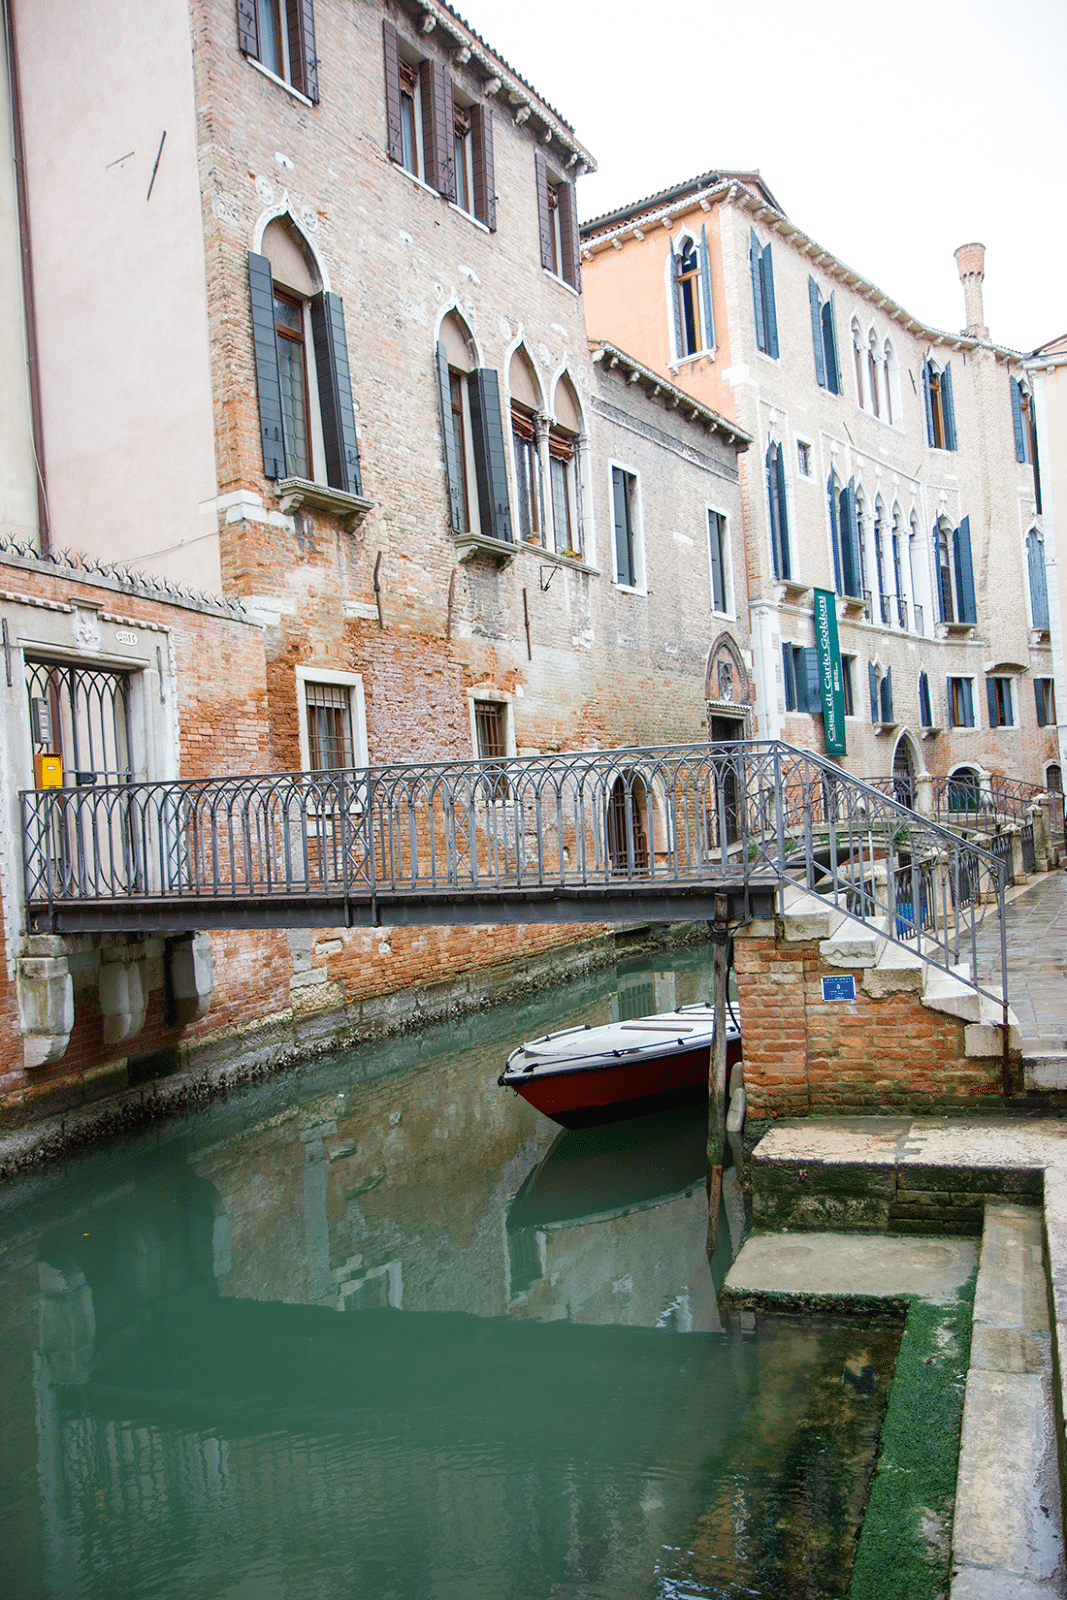 Sights in Venice, Italy